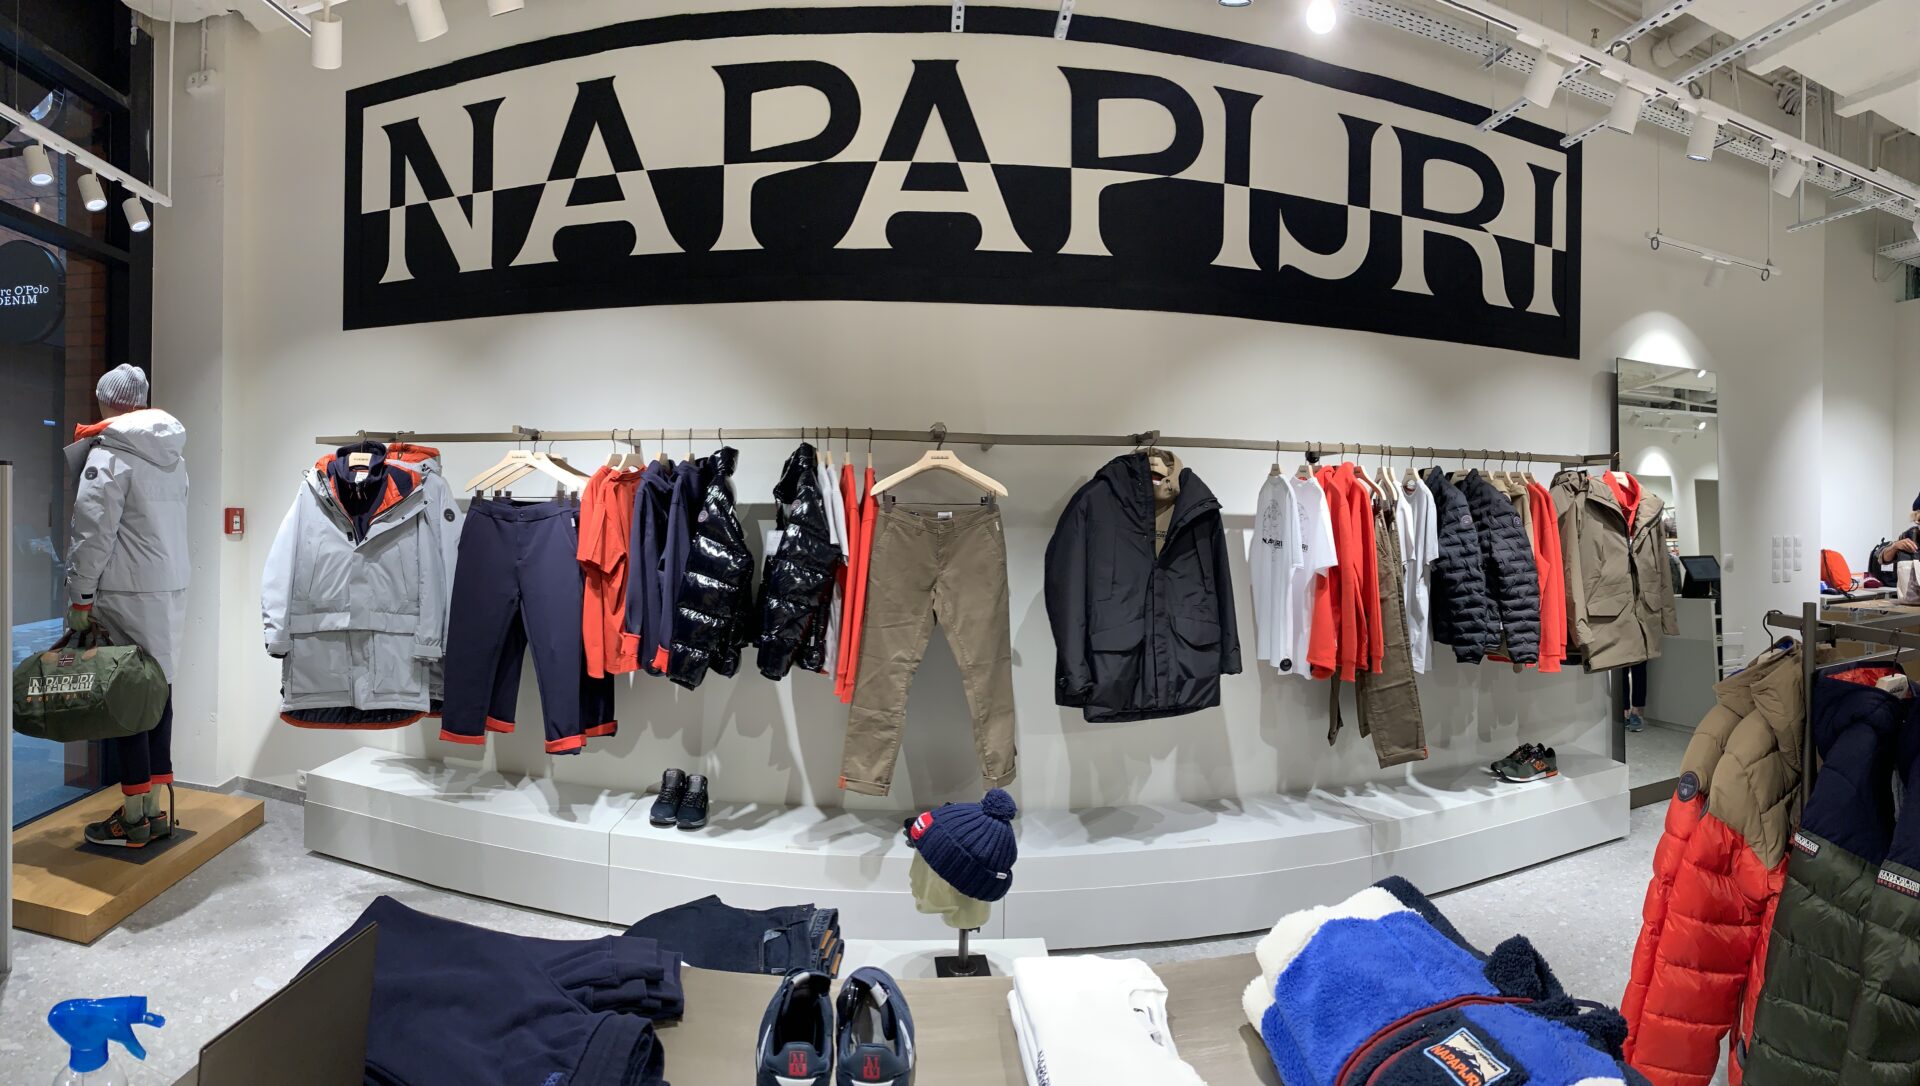 heks Spektakel Additief Napapijri store opening Warsaw – Brandgate Company